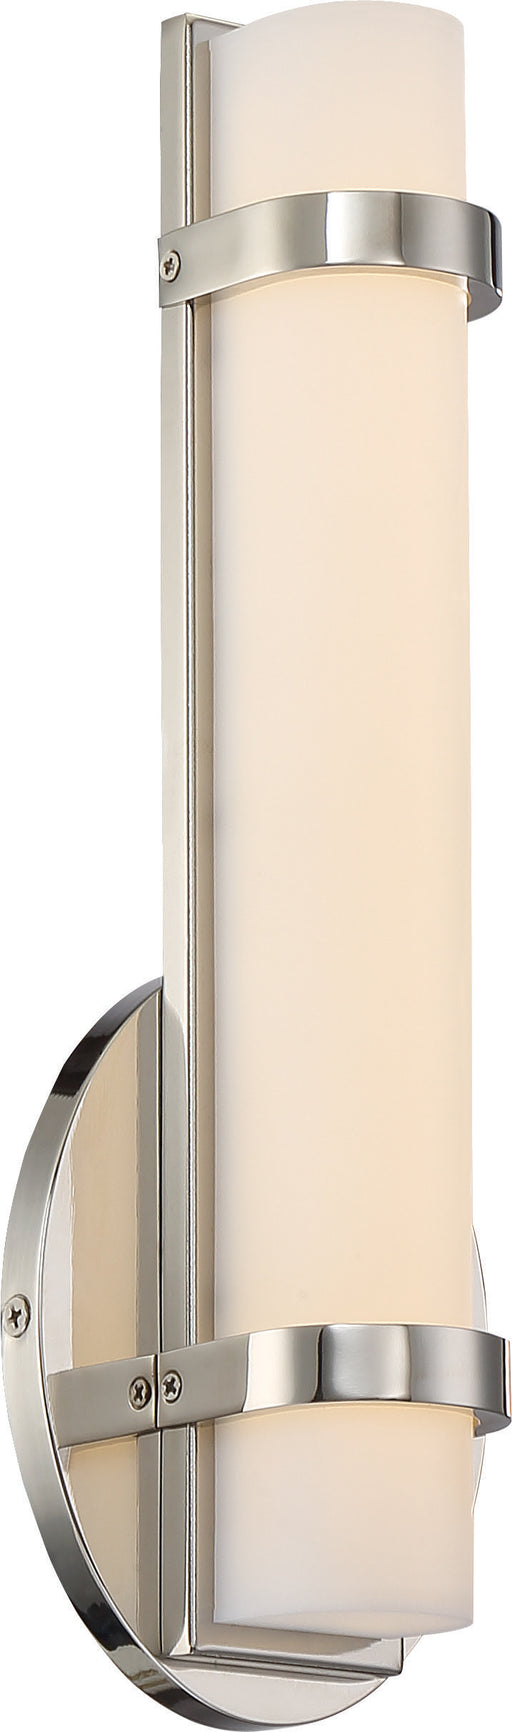 SATCO/NUVO Slice Single LED Wall Sconce Polished Nickel Finish (62-931)